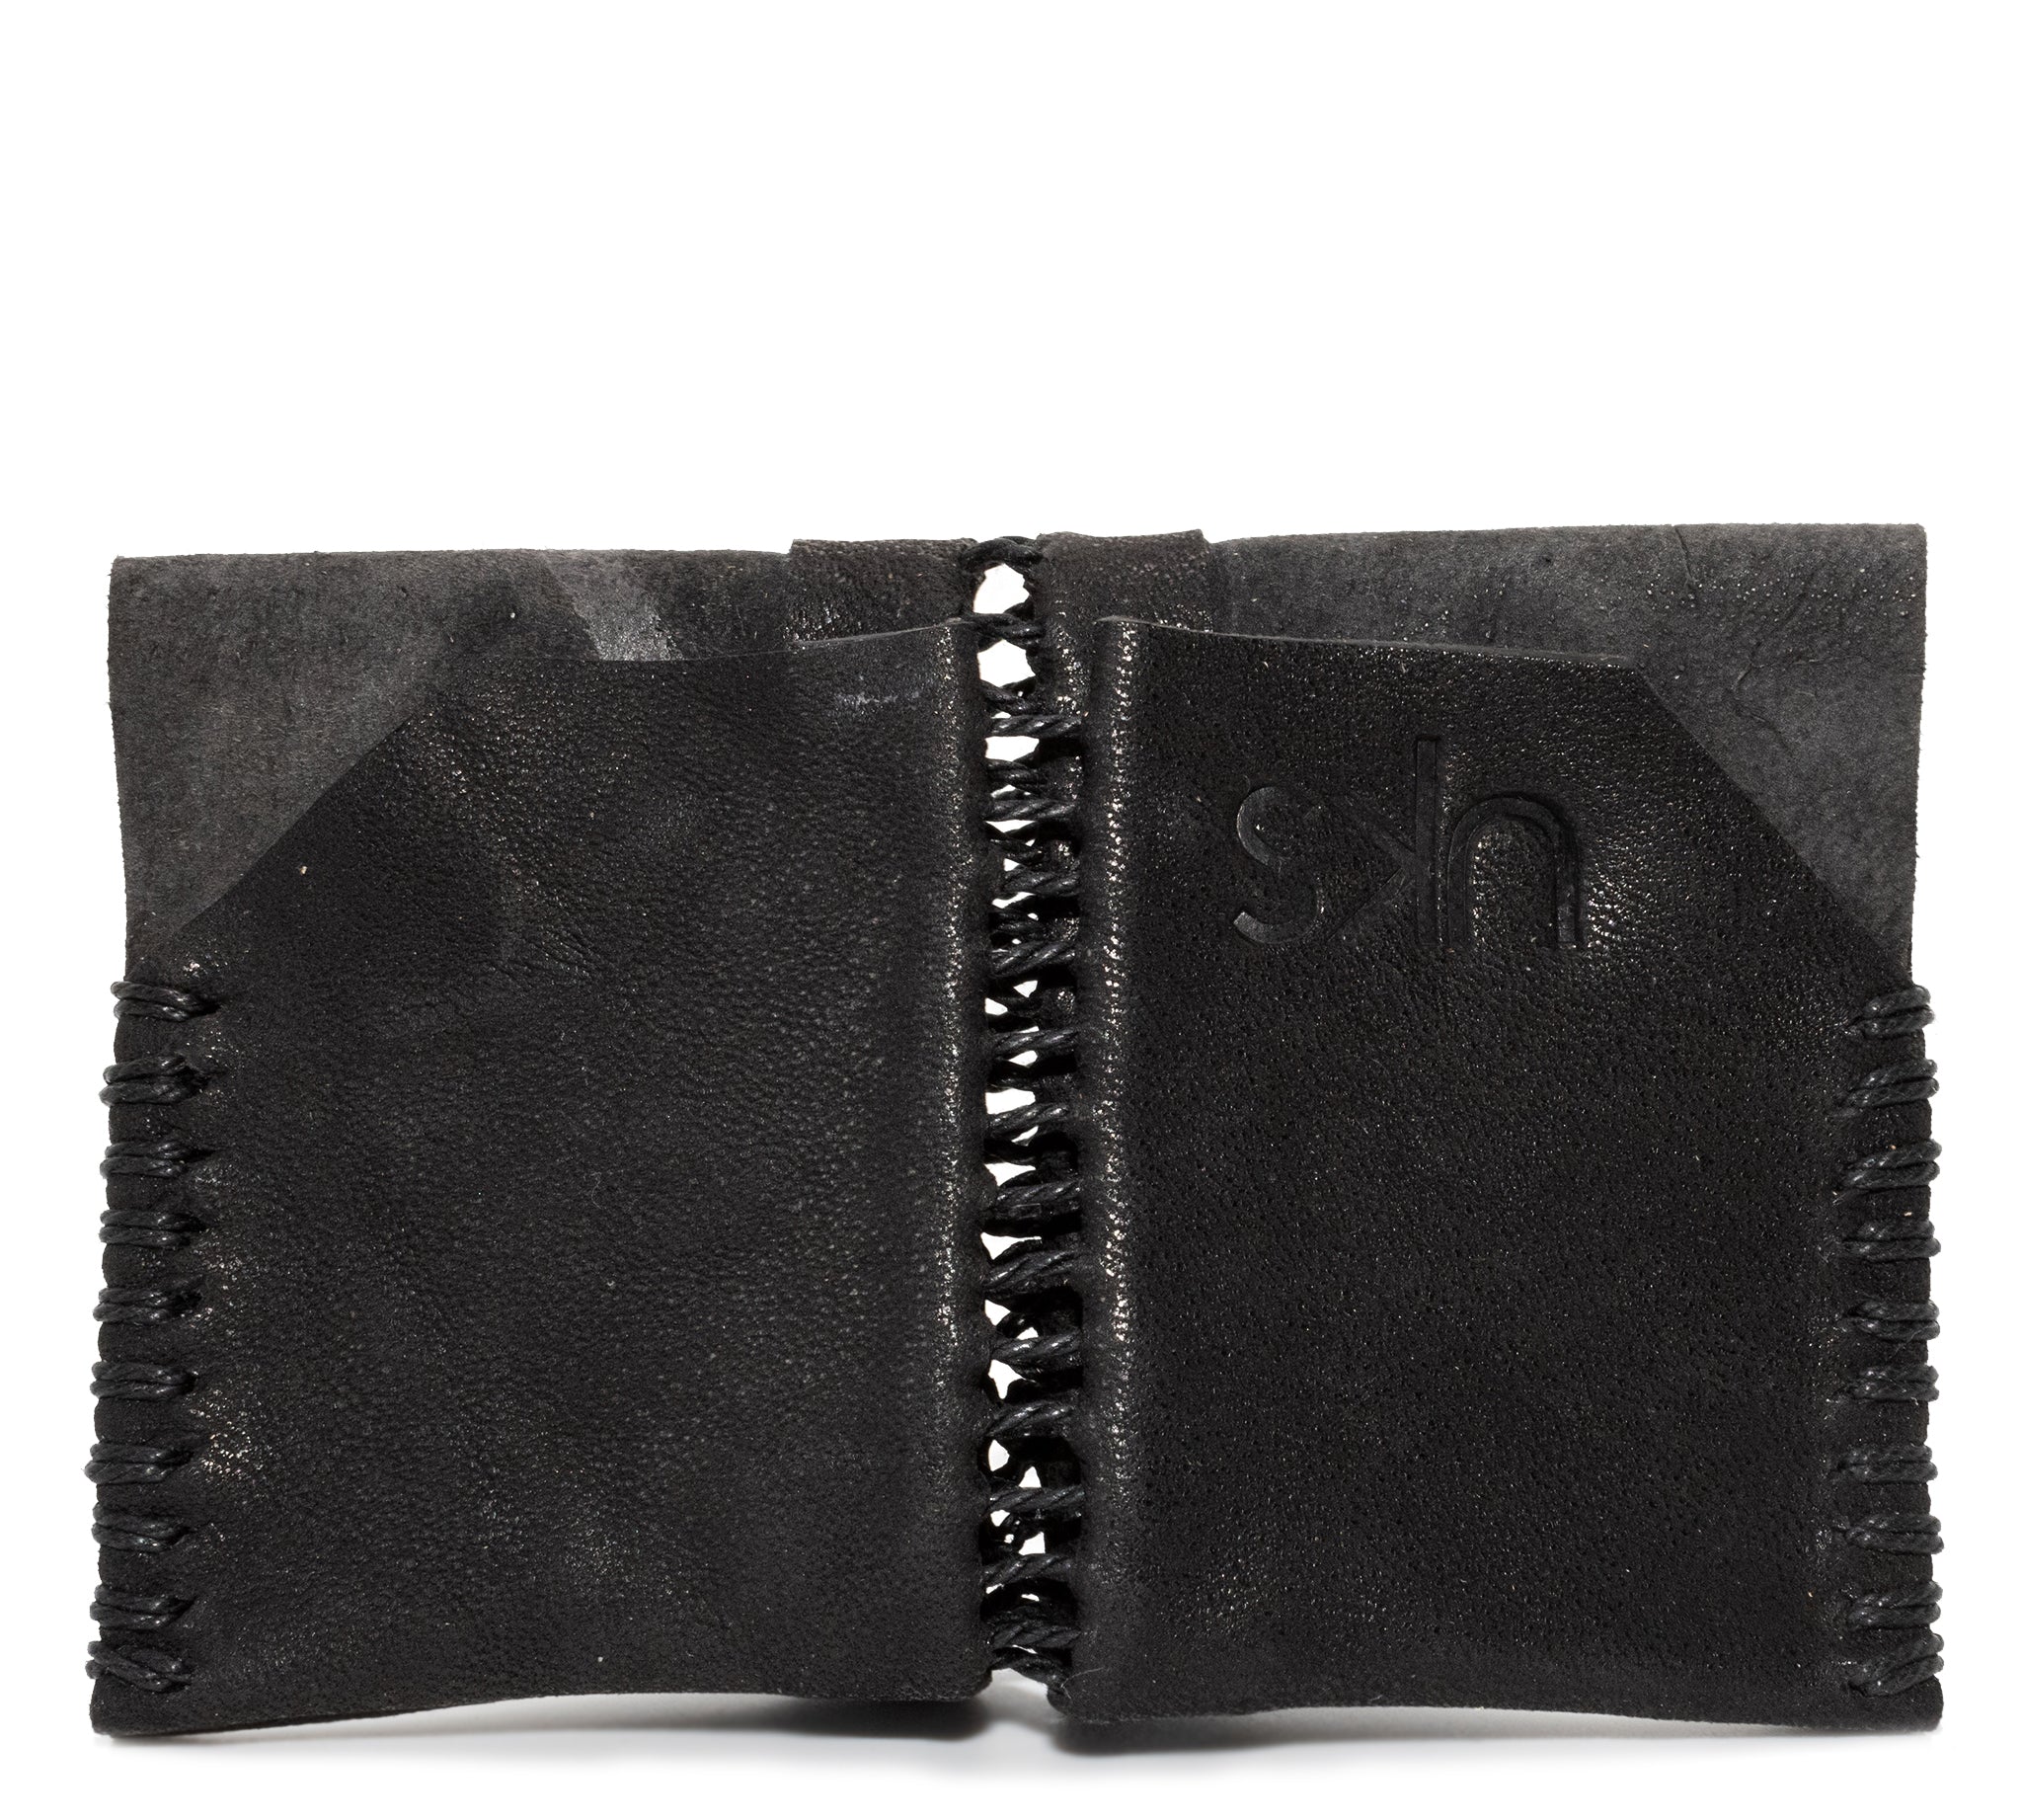 avant garde hand sewn leather cardholders from atelier skn